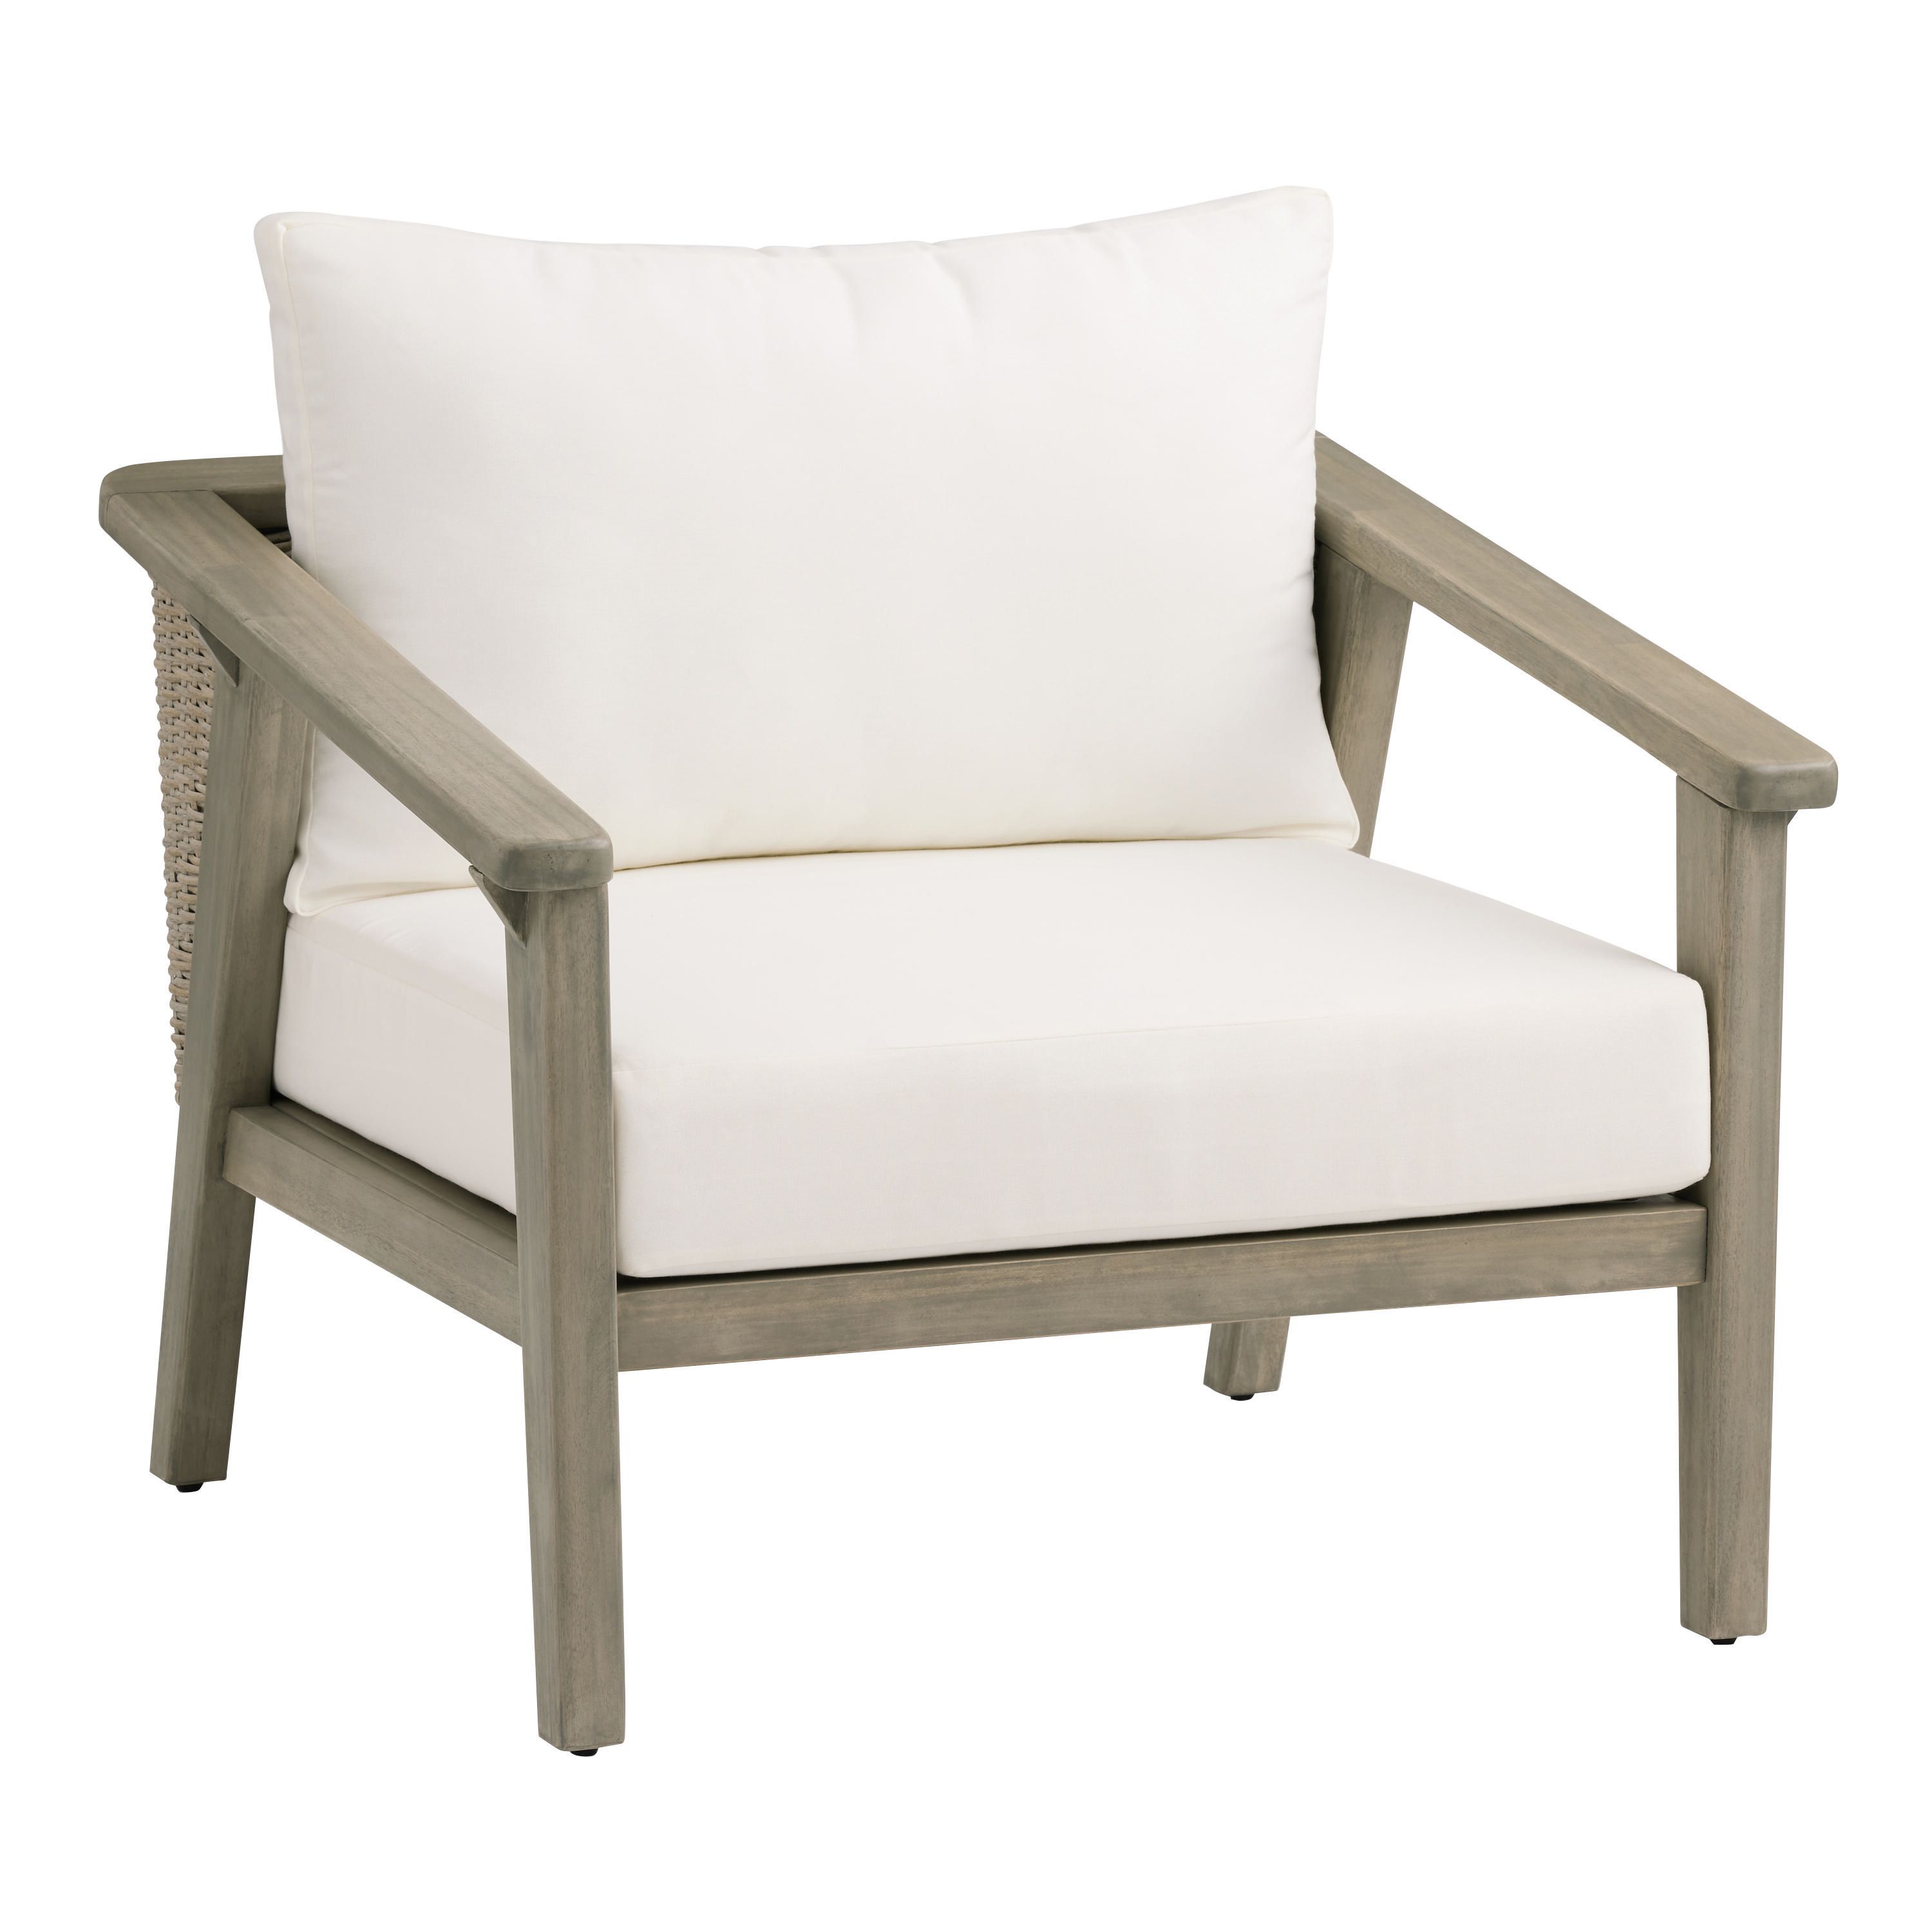 San Marino Graywashed Acacia Slope Arm Outdoor Chair | World Market